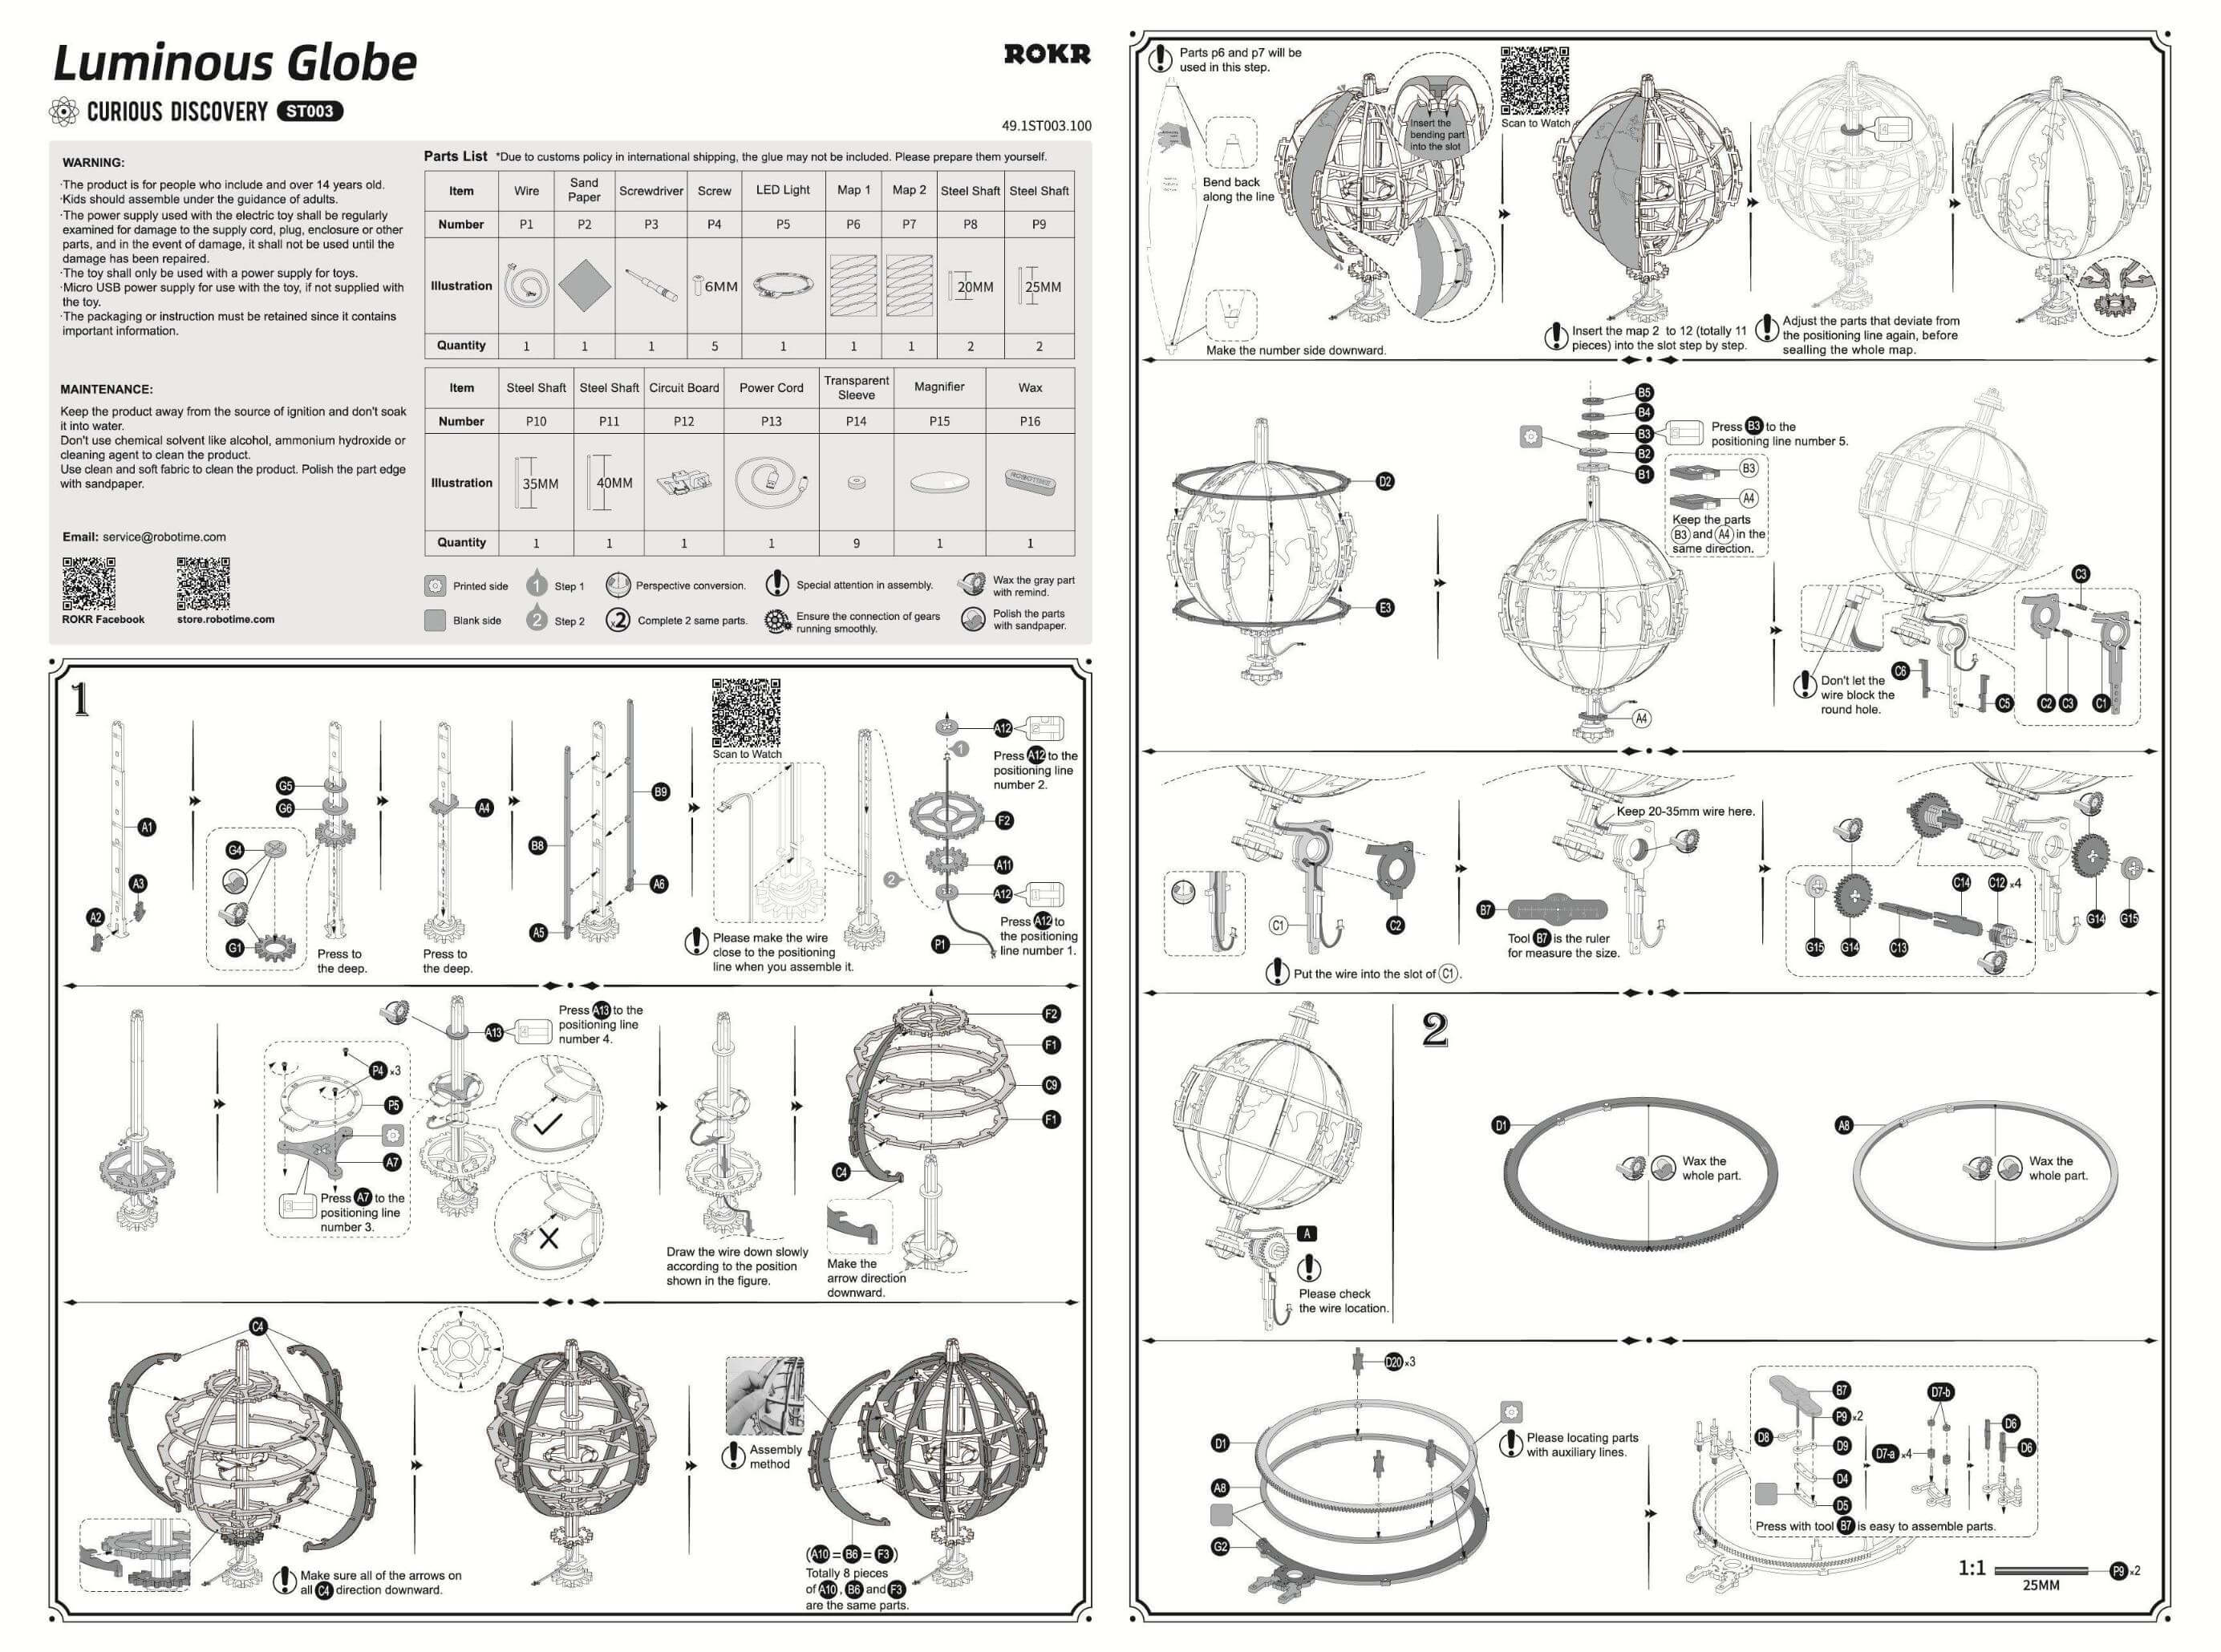 RST003 - Luminous Globe | Robotime ROKR Curious Discovery Manual